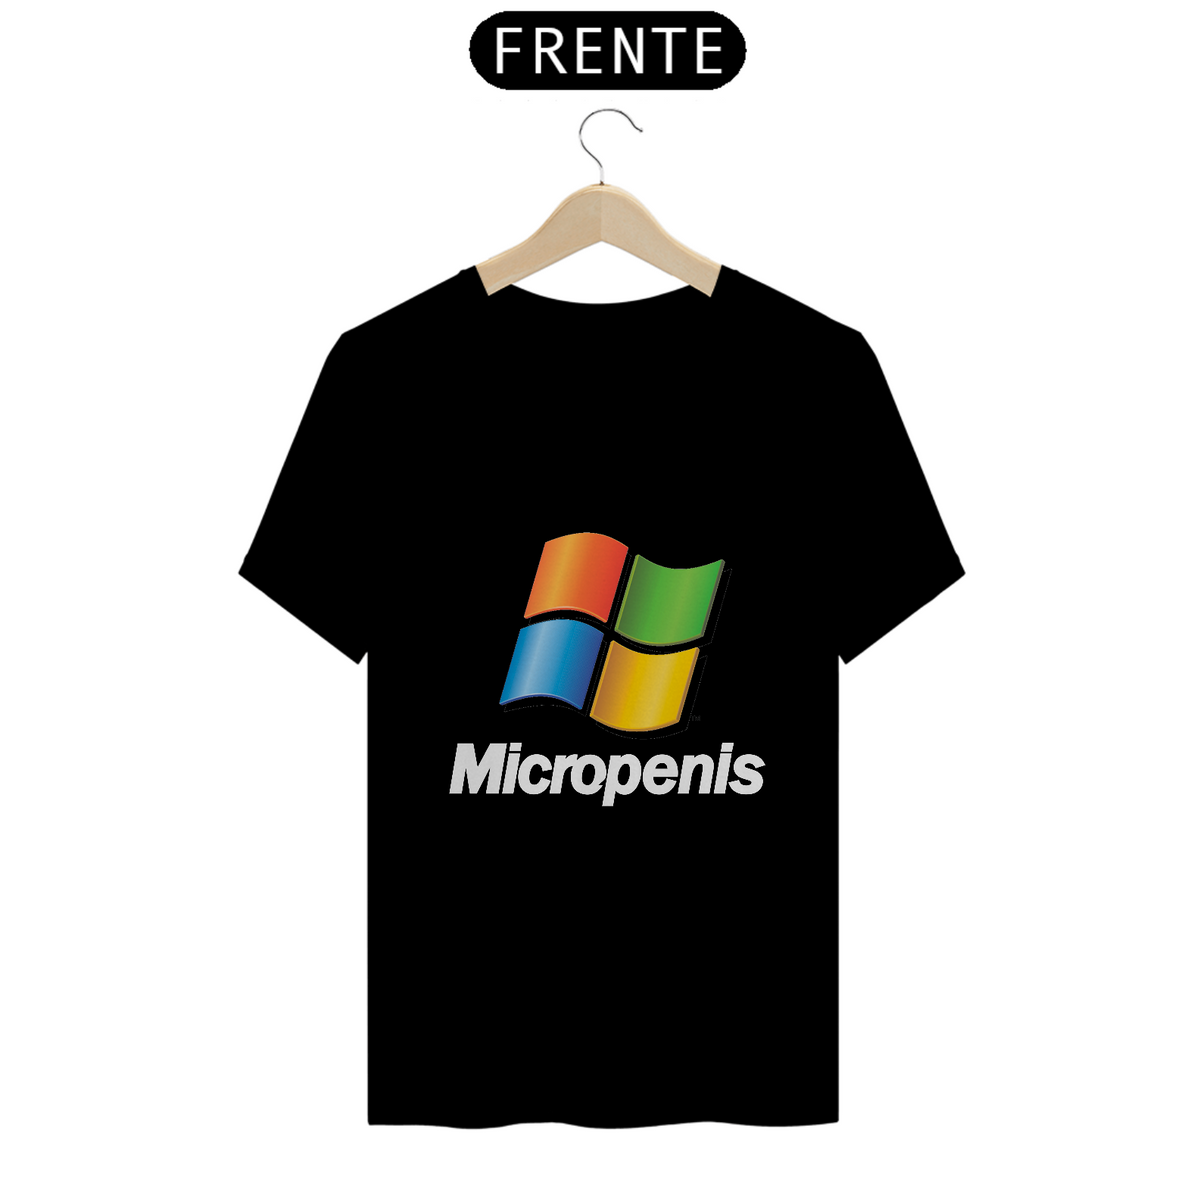 Nome do produto: Micropenis